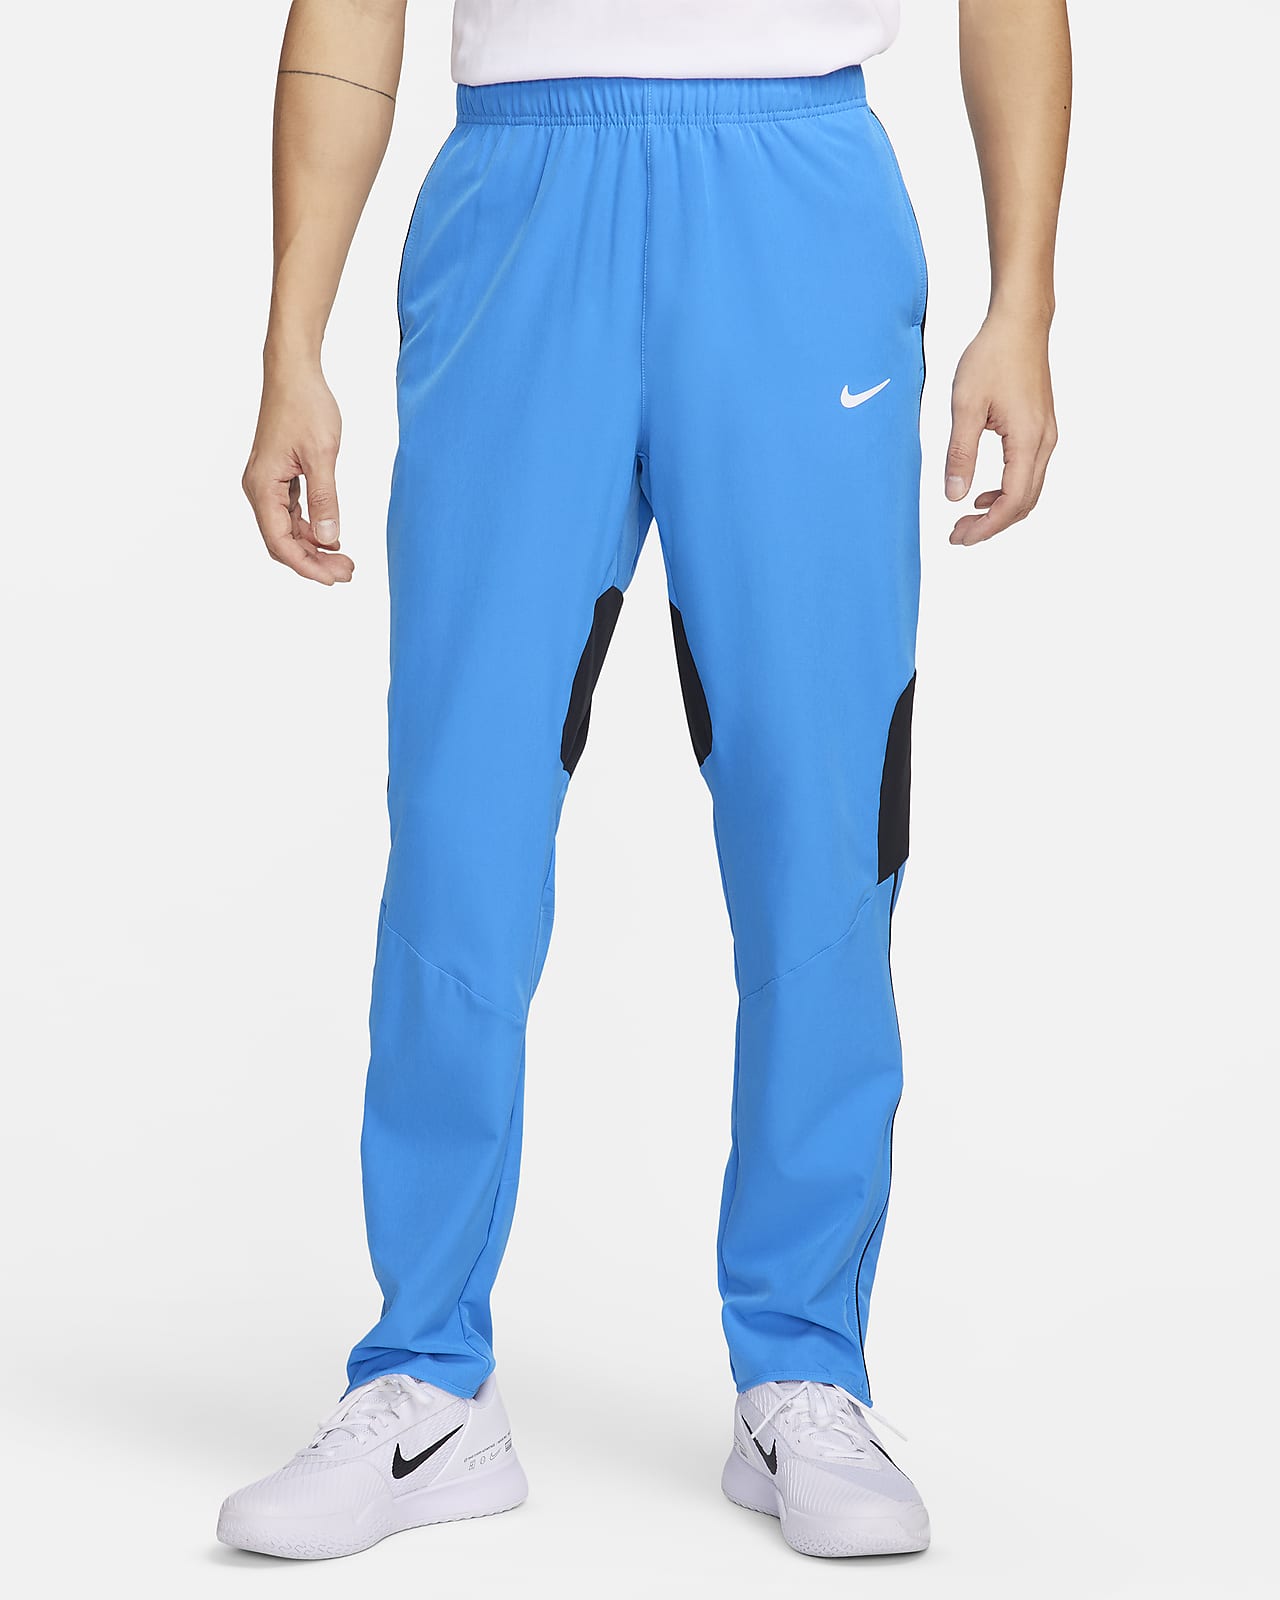 Nike Mens Dri Fit Basketball Training Pants Green Dark Gray S, M, L, XL,  2XL | eBay